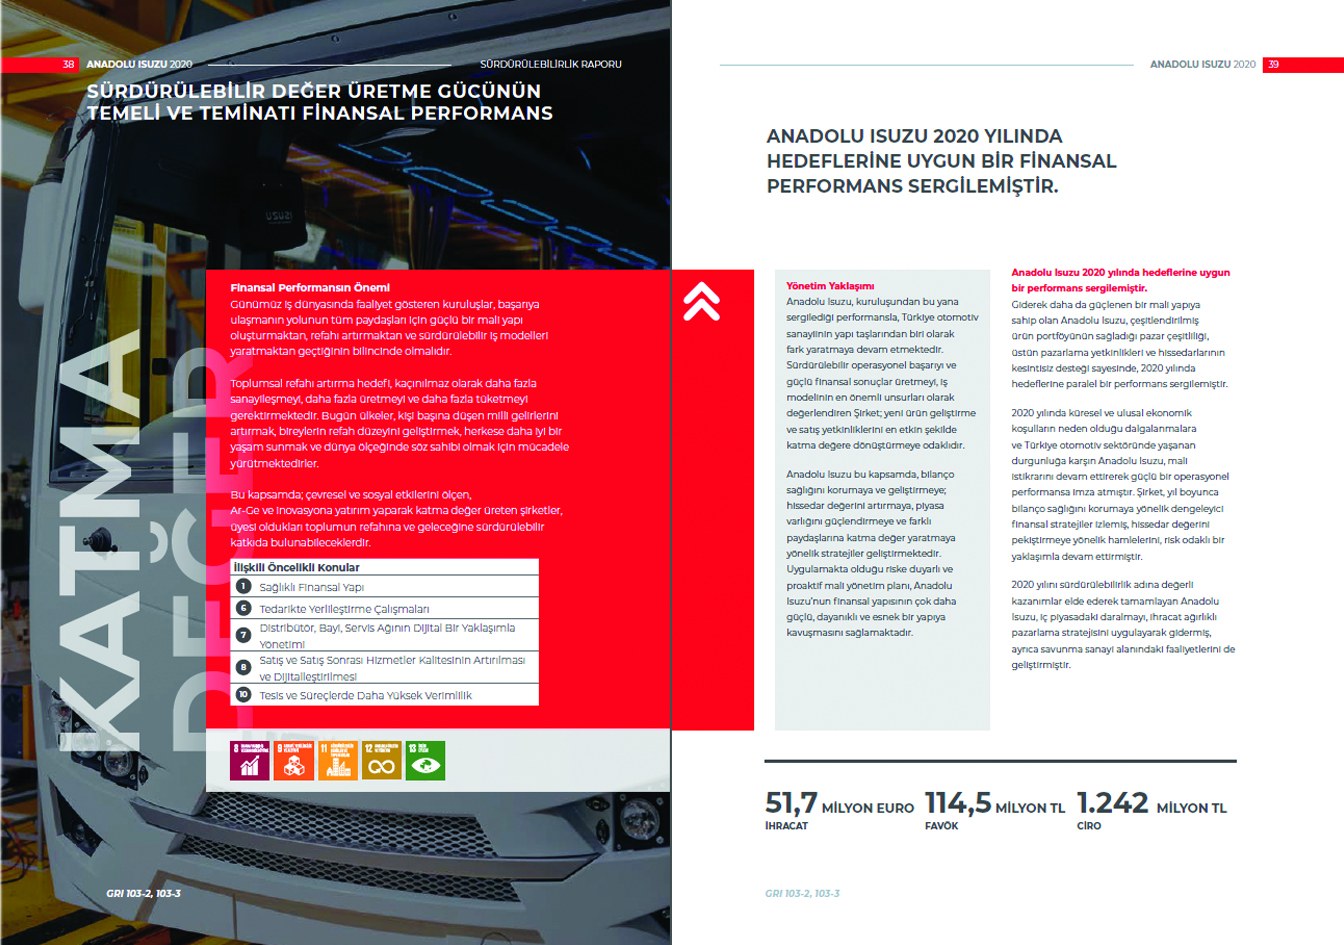 ANADOLU ISUZU / 2020 Sürdürülebilirlik Raporu / 2020 Sustainability Report